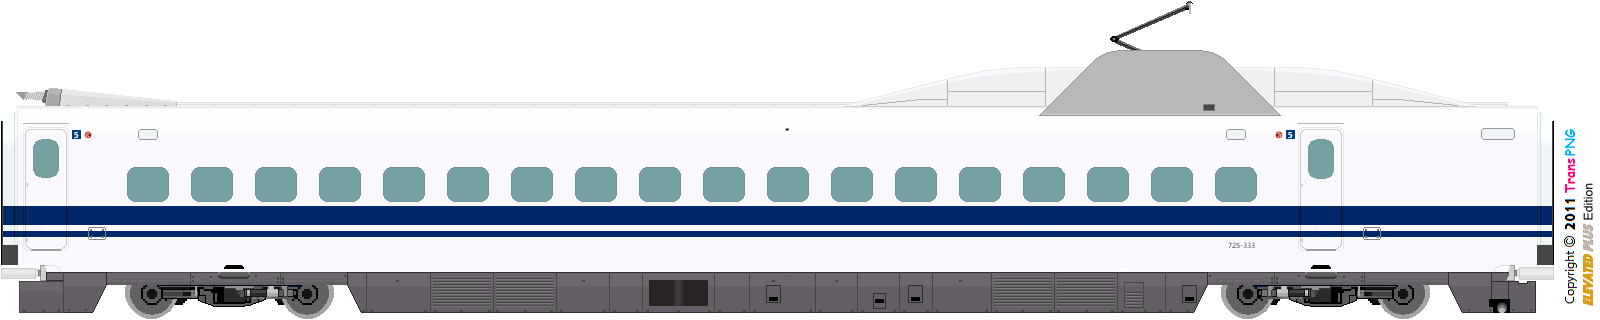 [9010] Central Japan Railway 52287580731_7f8e4a2fb3_o